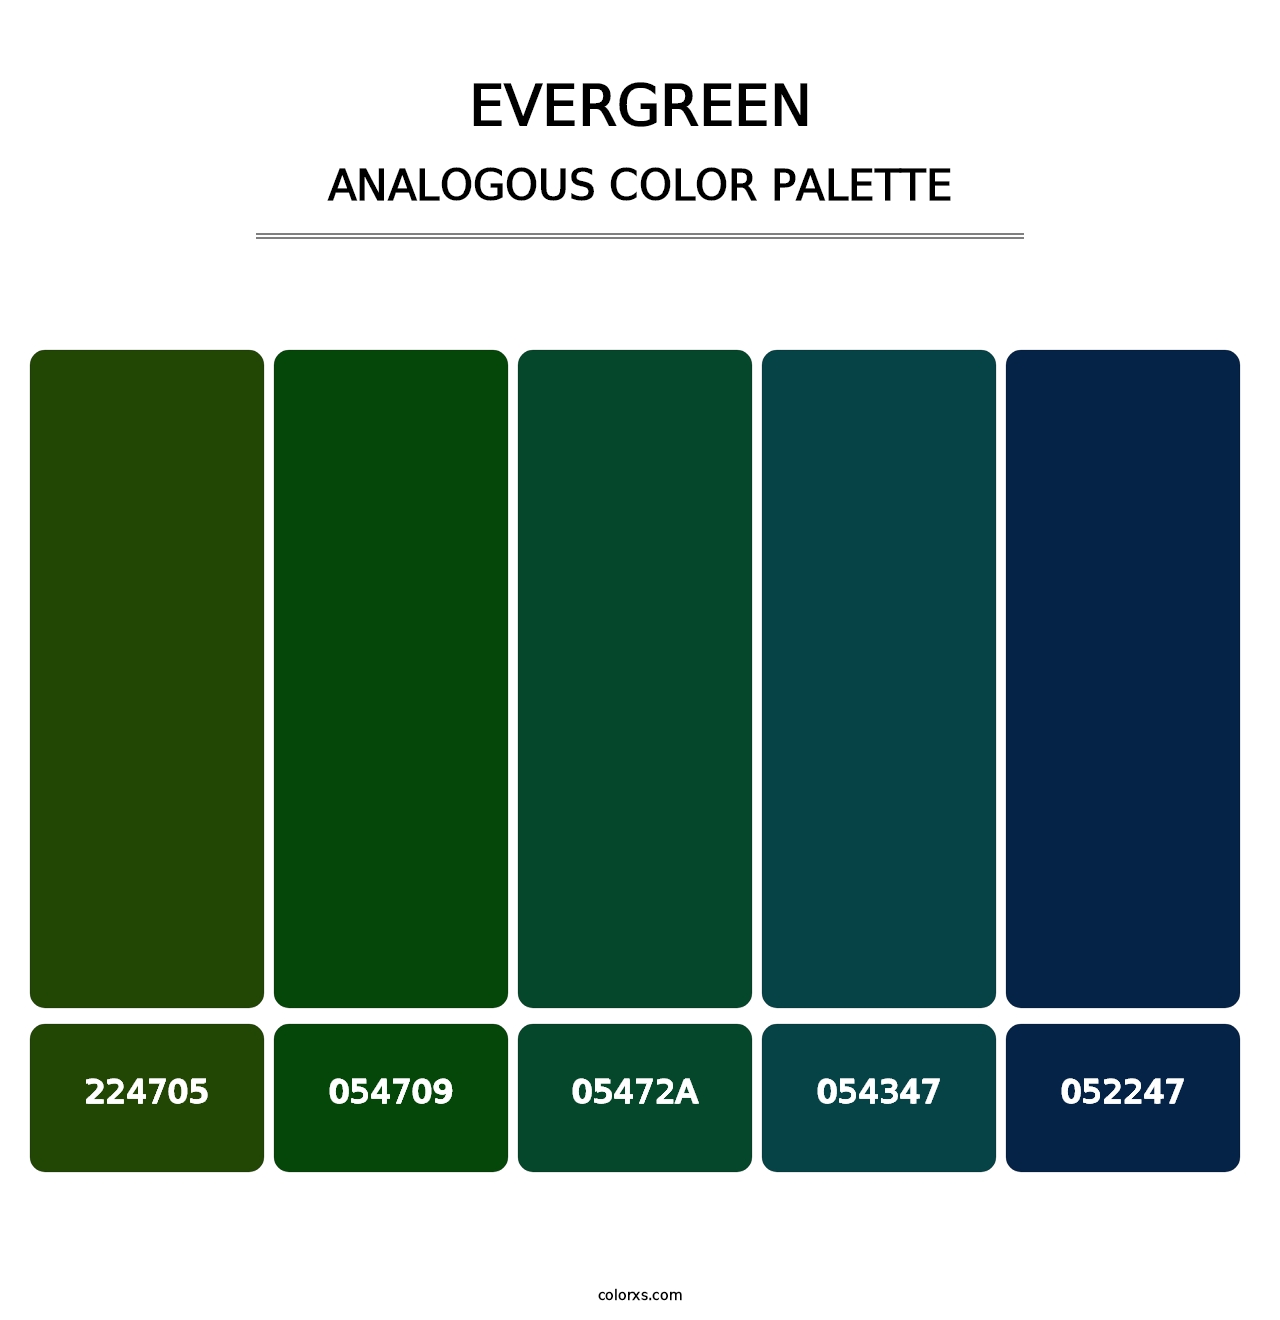 Evergreen - Analogous Color Palette